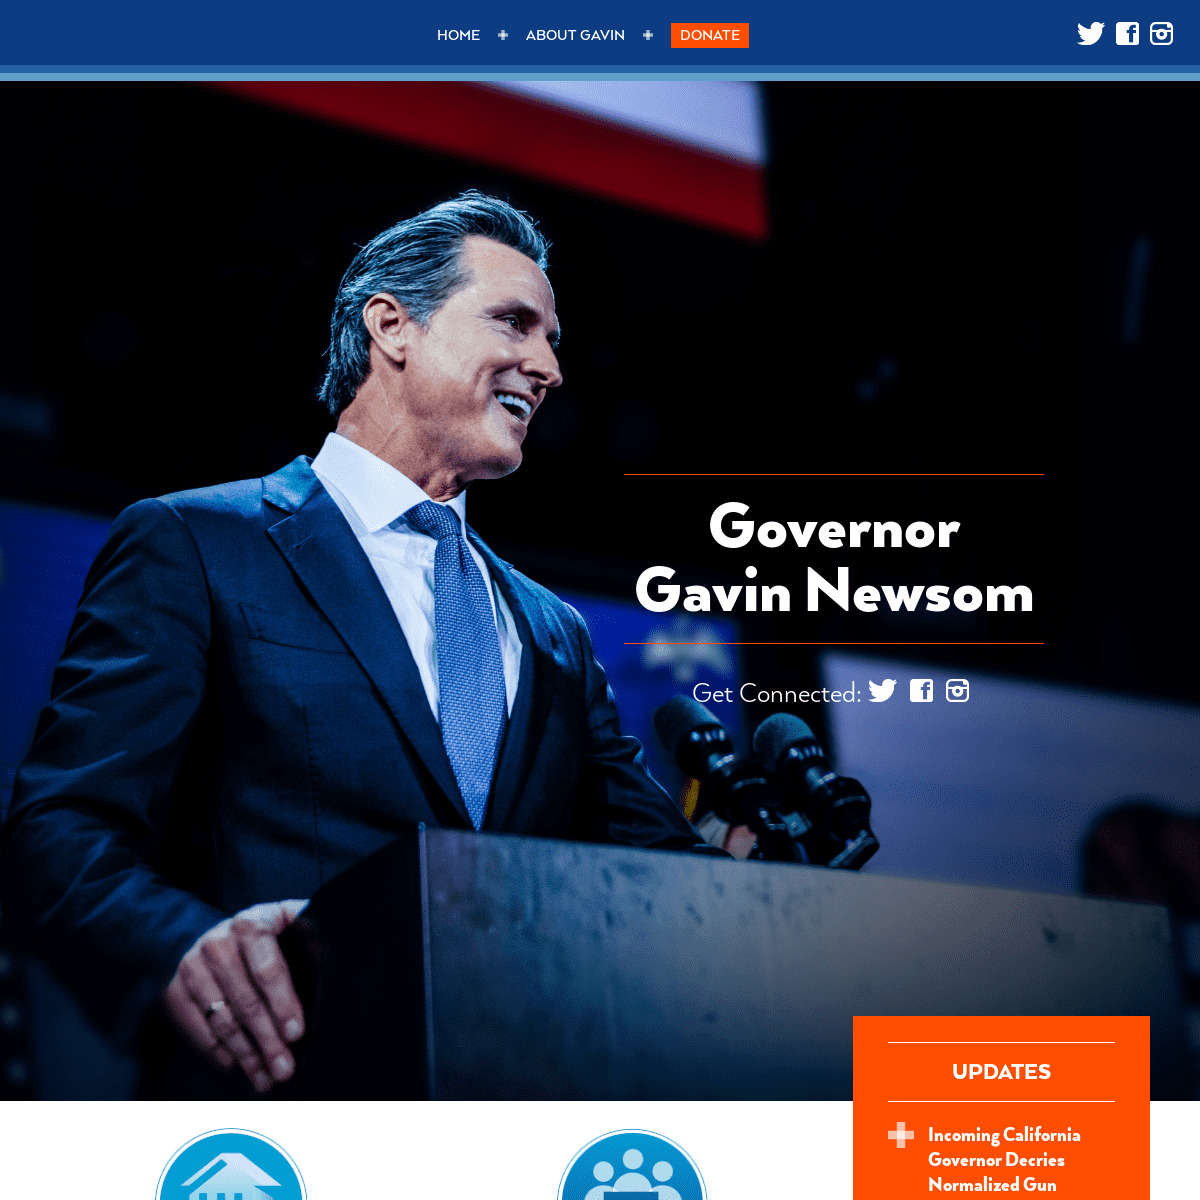 Gavin Newsom for Governor 2018. Bold Leadership for California.